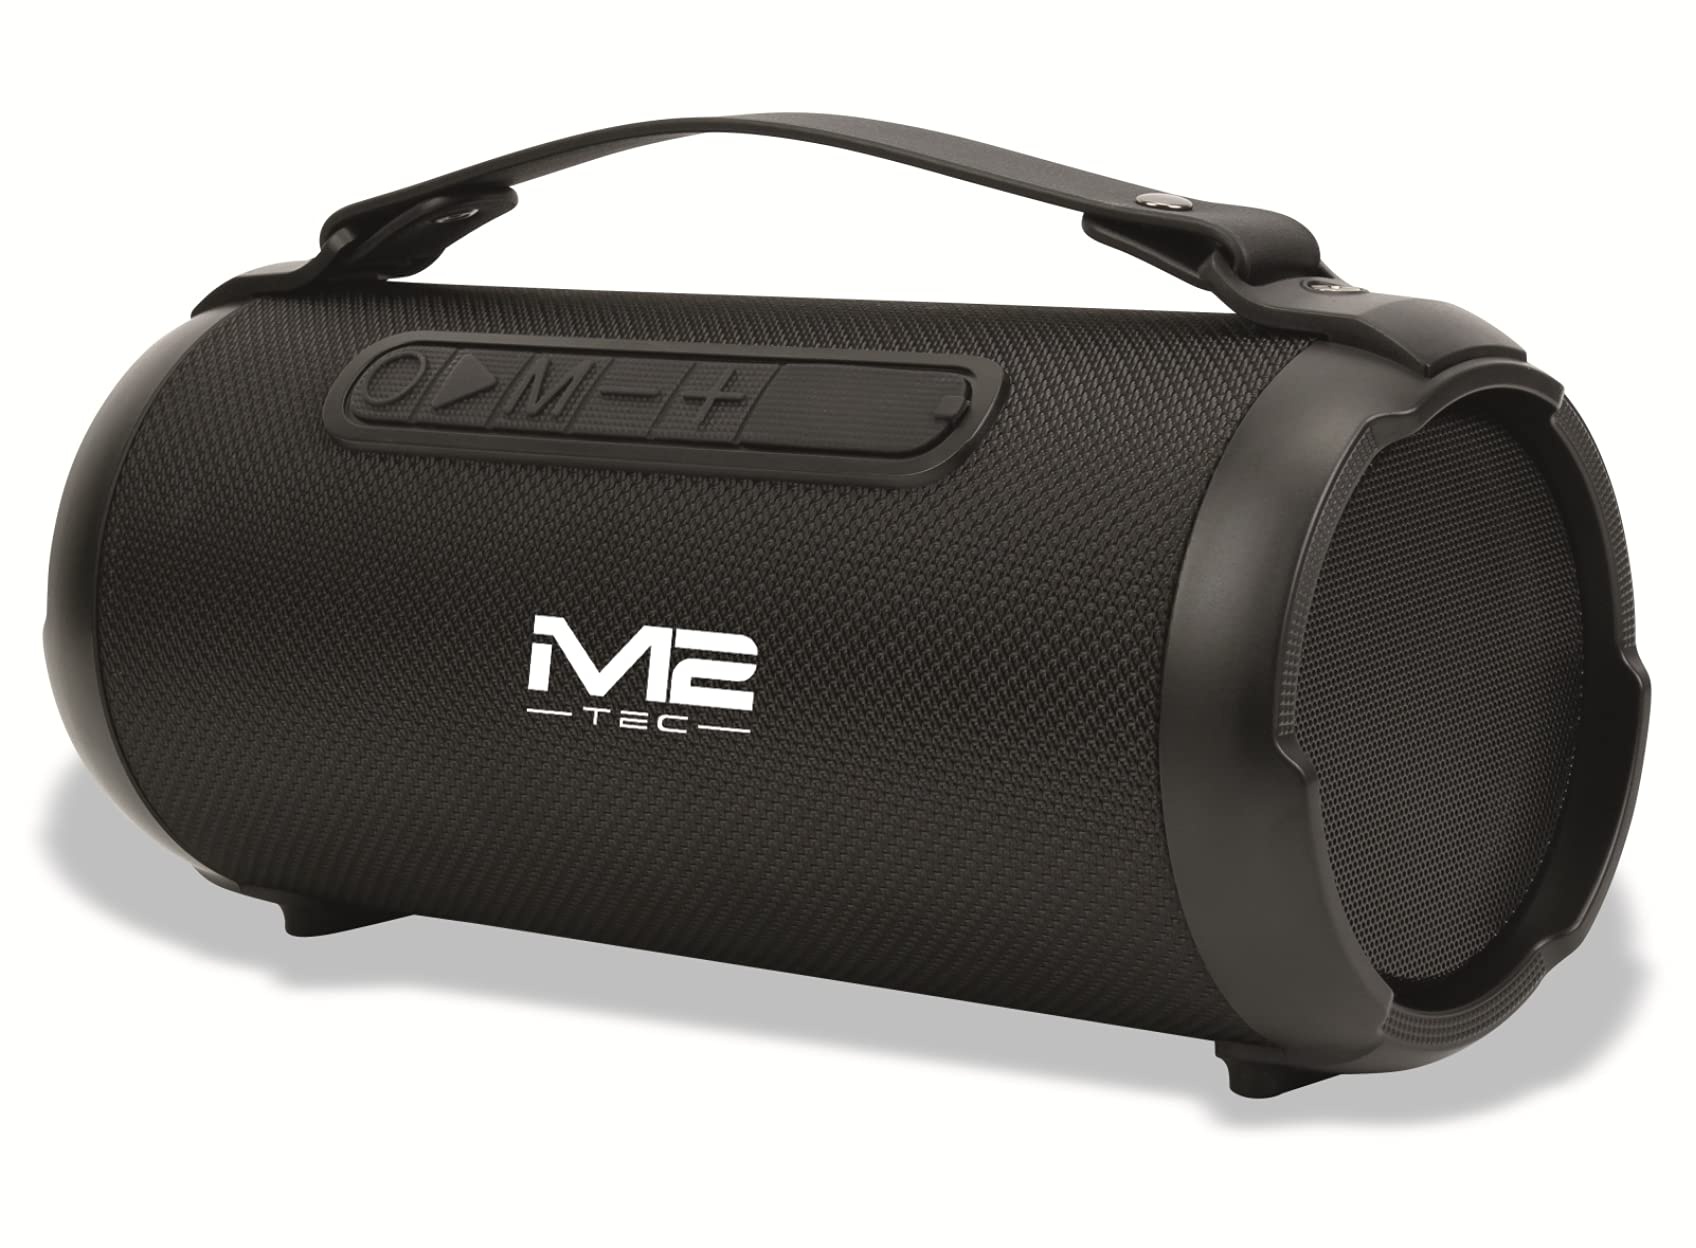 M2 TEC Tragbarer Lautsprecher Musikbox Bluetooth Premium Subwoofer Radio USB Tragegurt